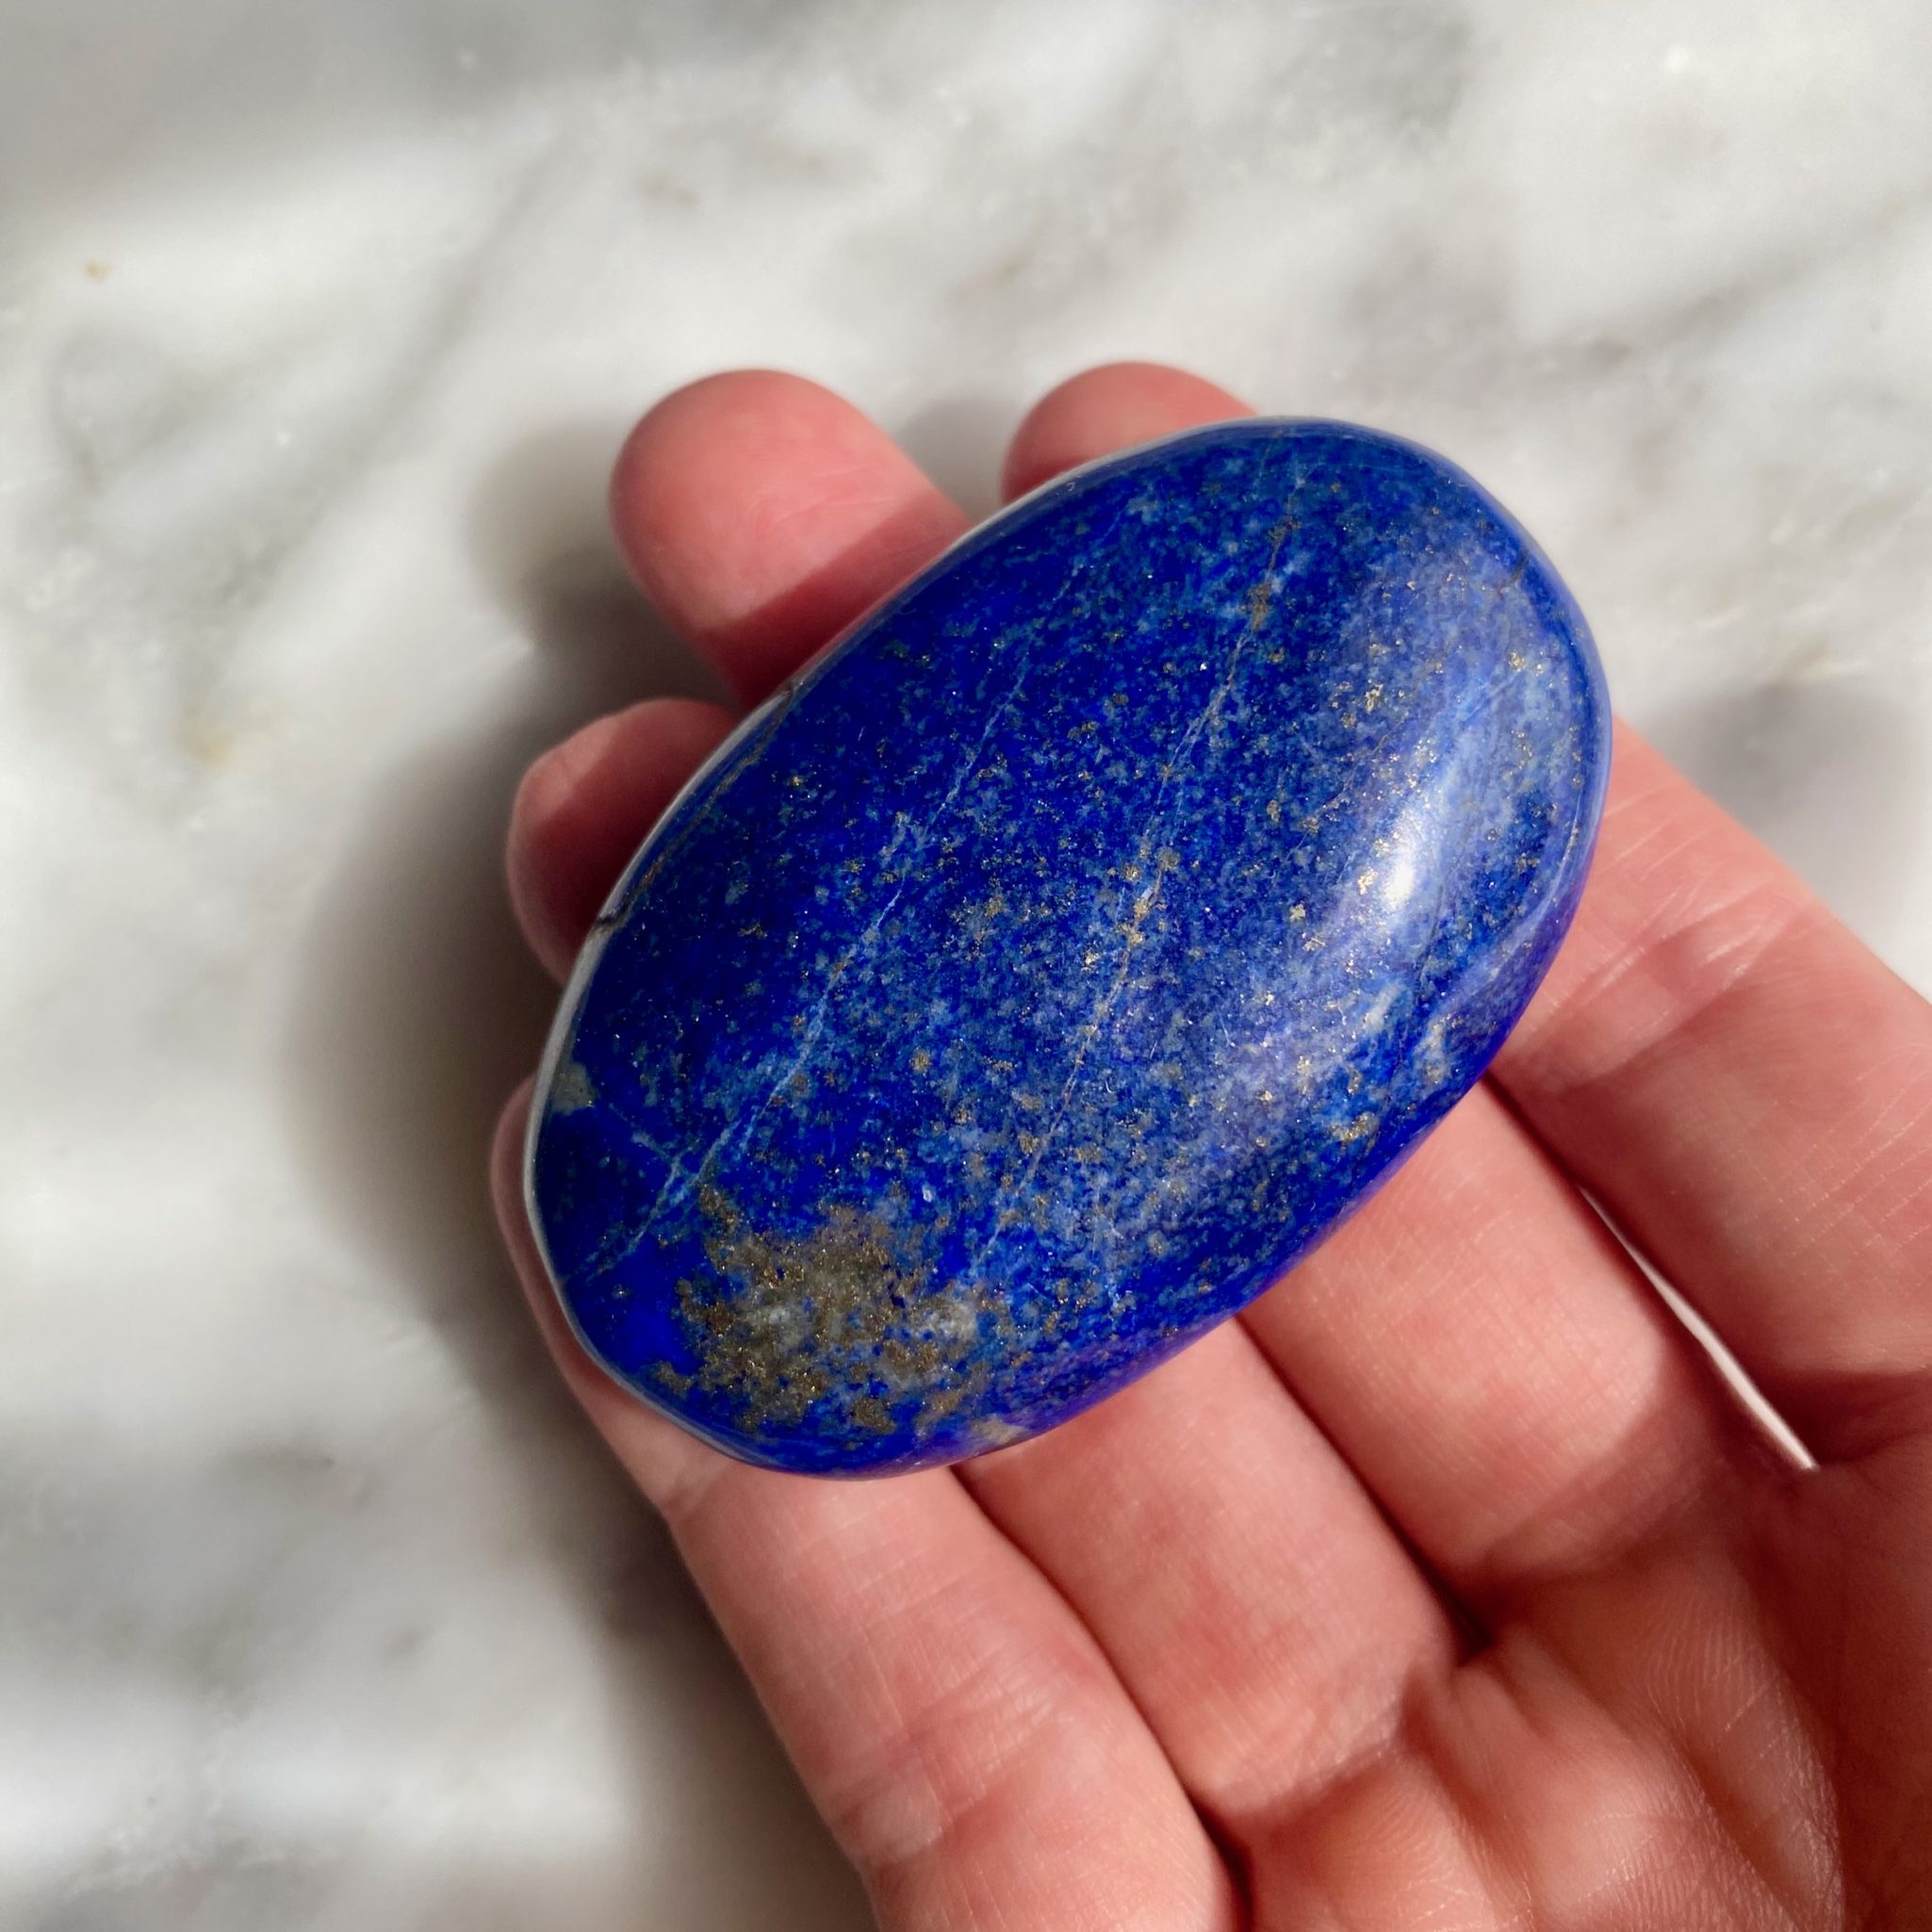 lapis lazuli palmstone - pierre de paume de lapis lazuli